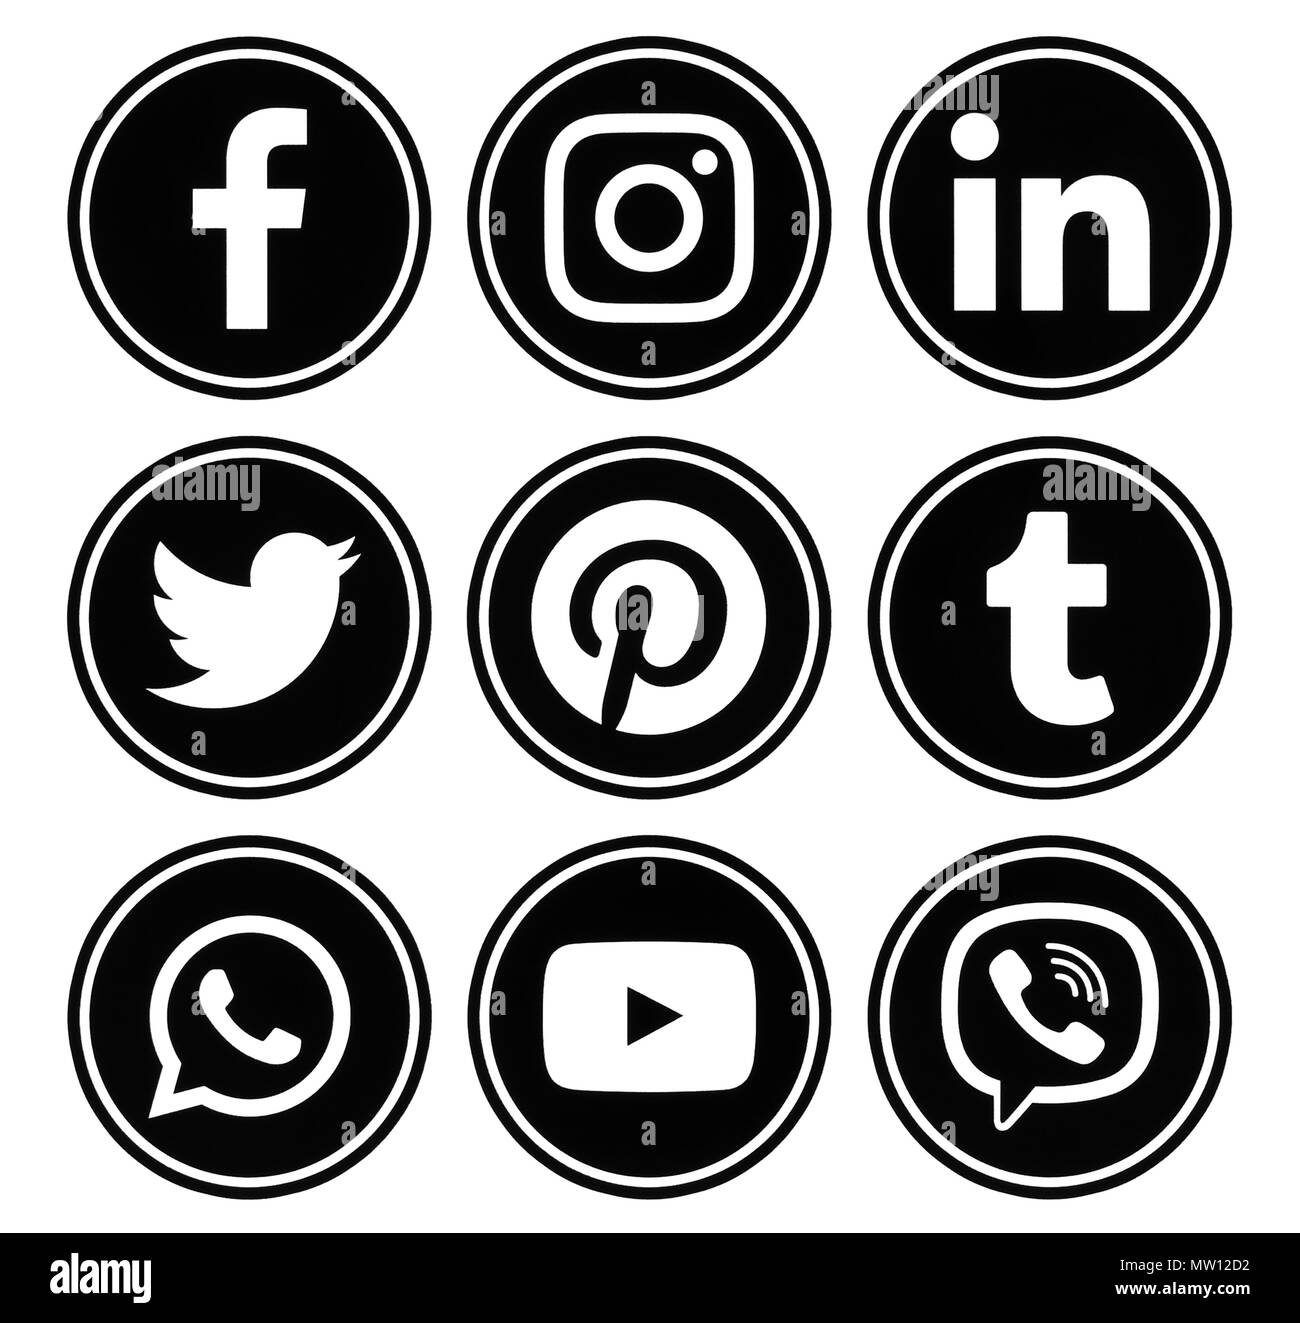 Kiev Ukraine December 08 17 Popular Circle Social Media Black Logos With Rim Printed On Paper Facebook Twitter Instagram Pinterest Linkedi Stock Photo Alamy